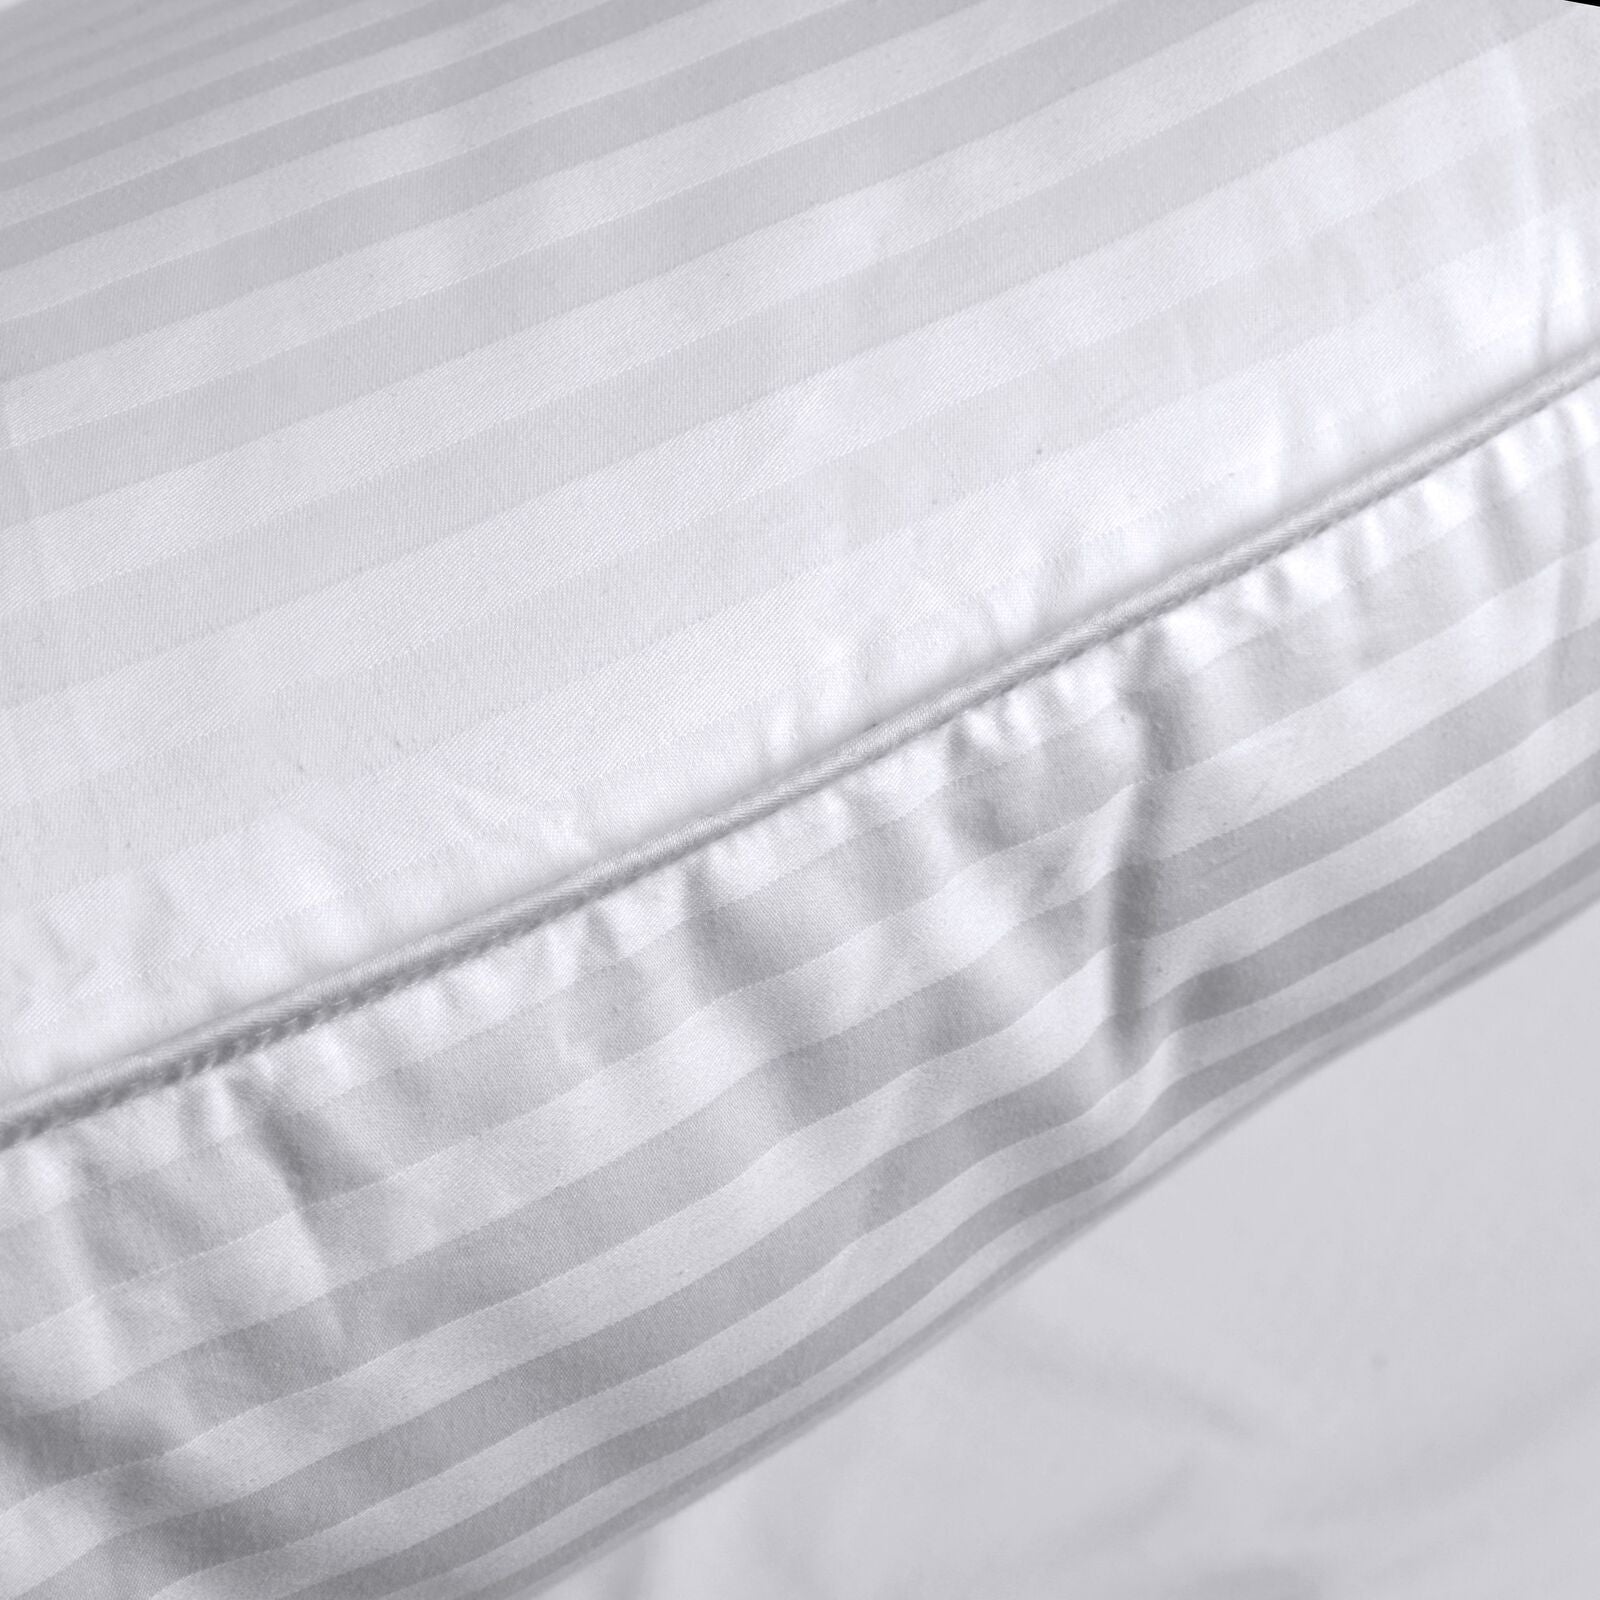 2x Hotel Cotton Cover Microfibre Pillow Alt to Memory Foam